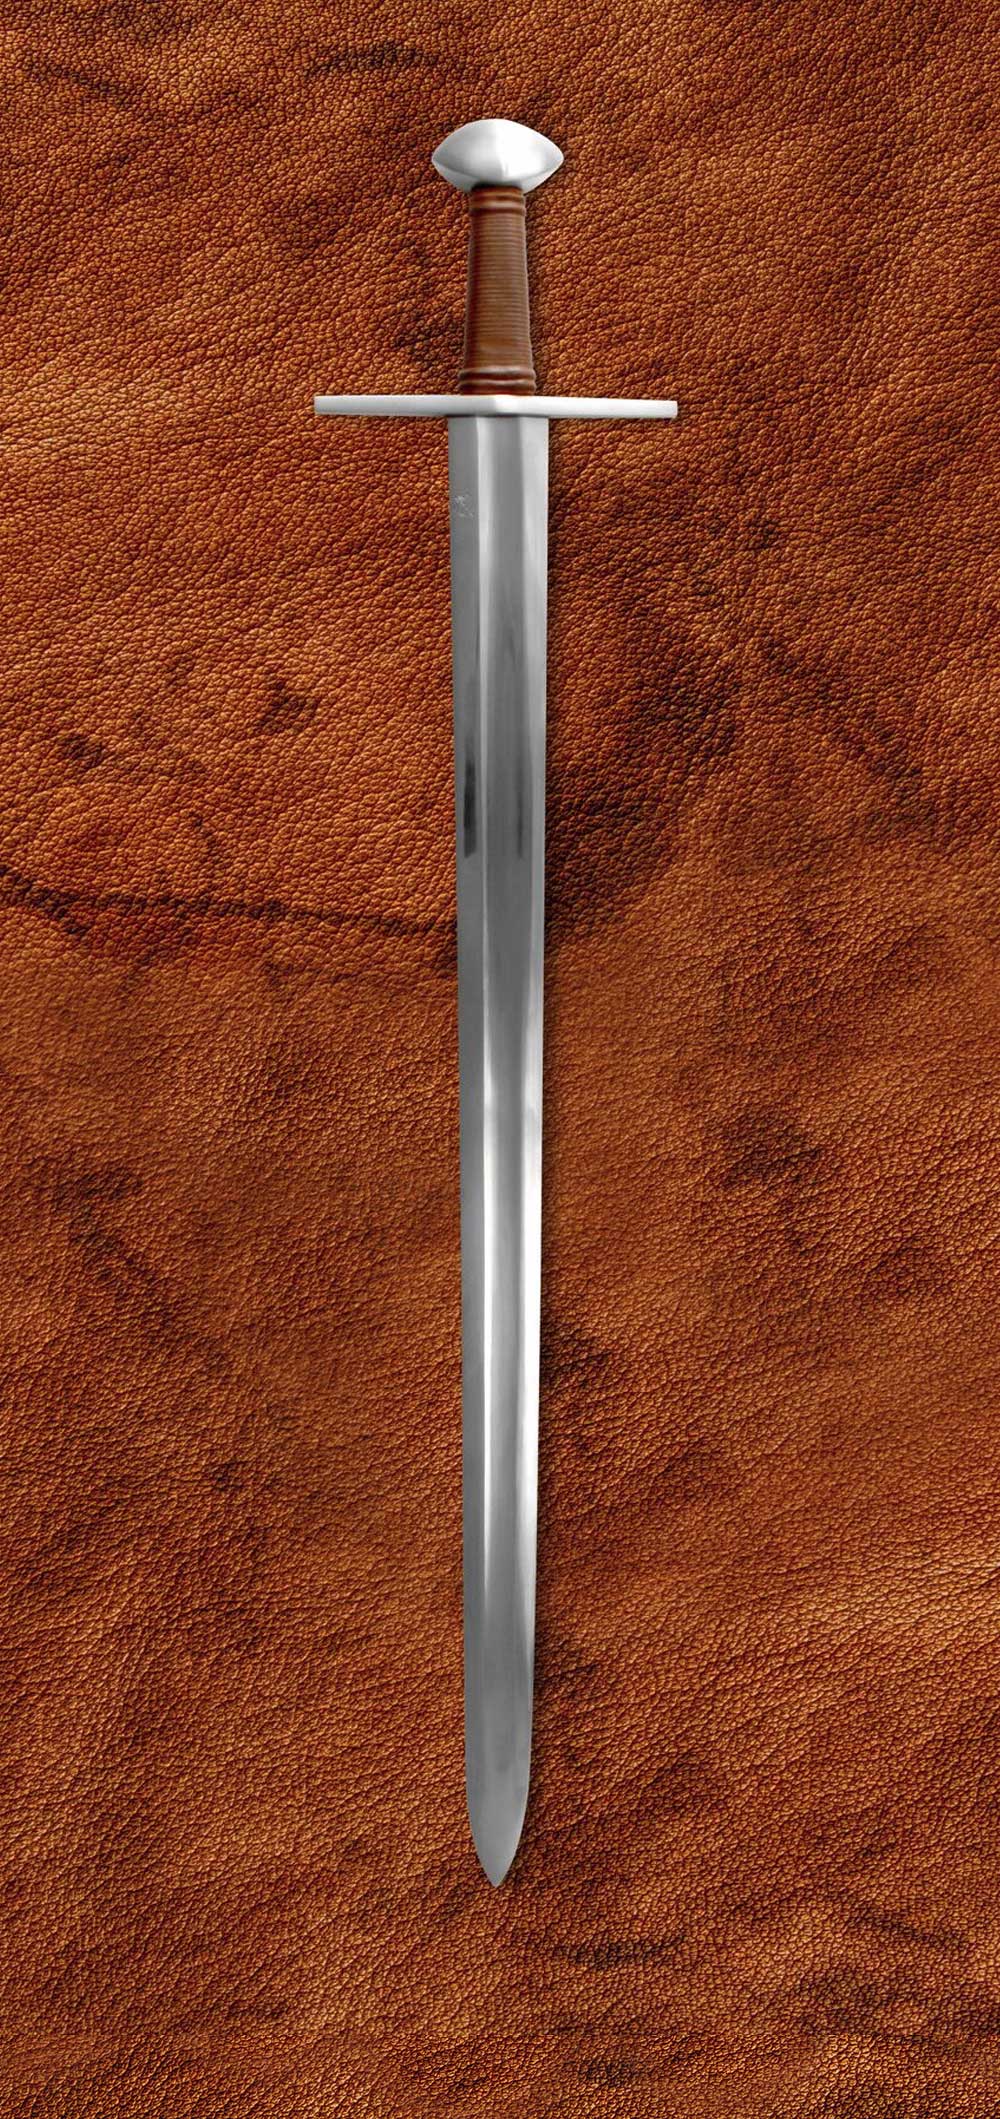 medieval swords types